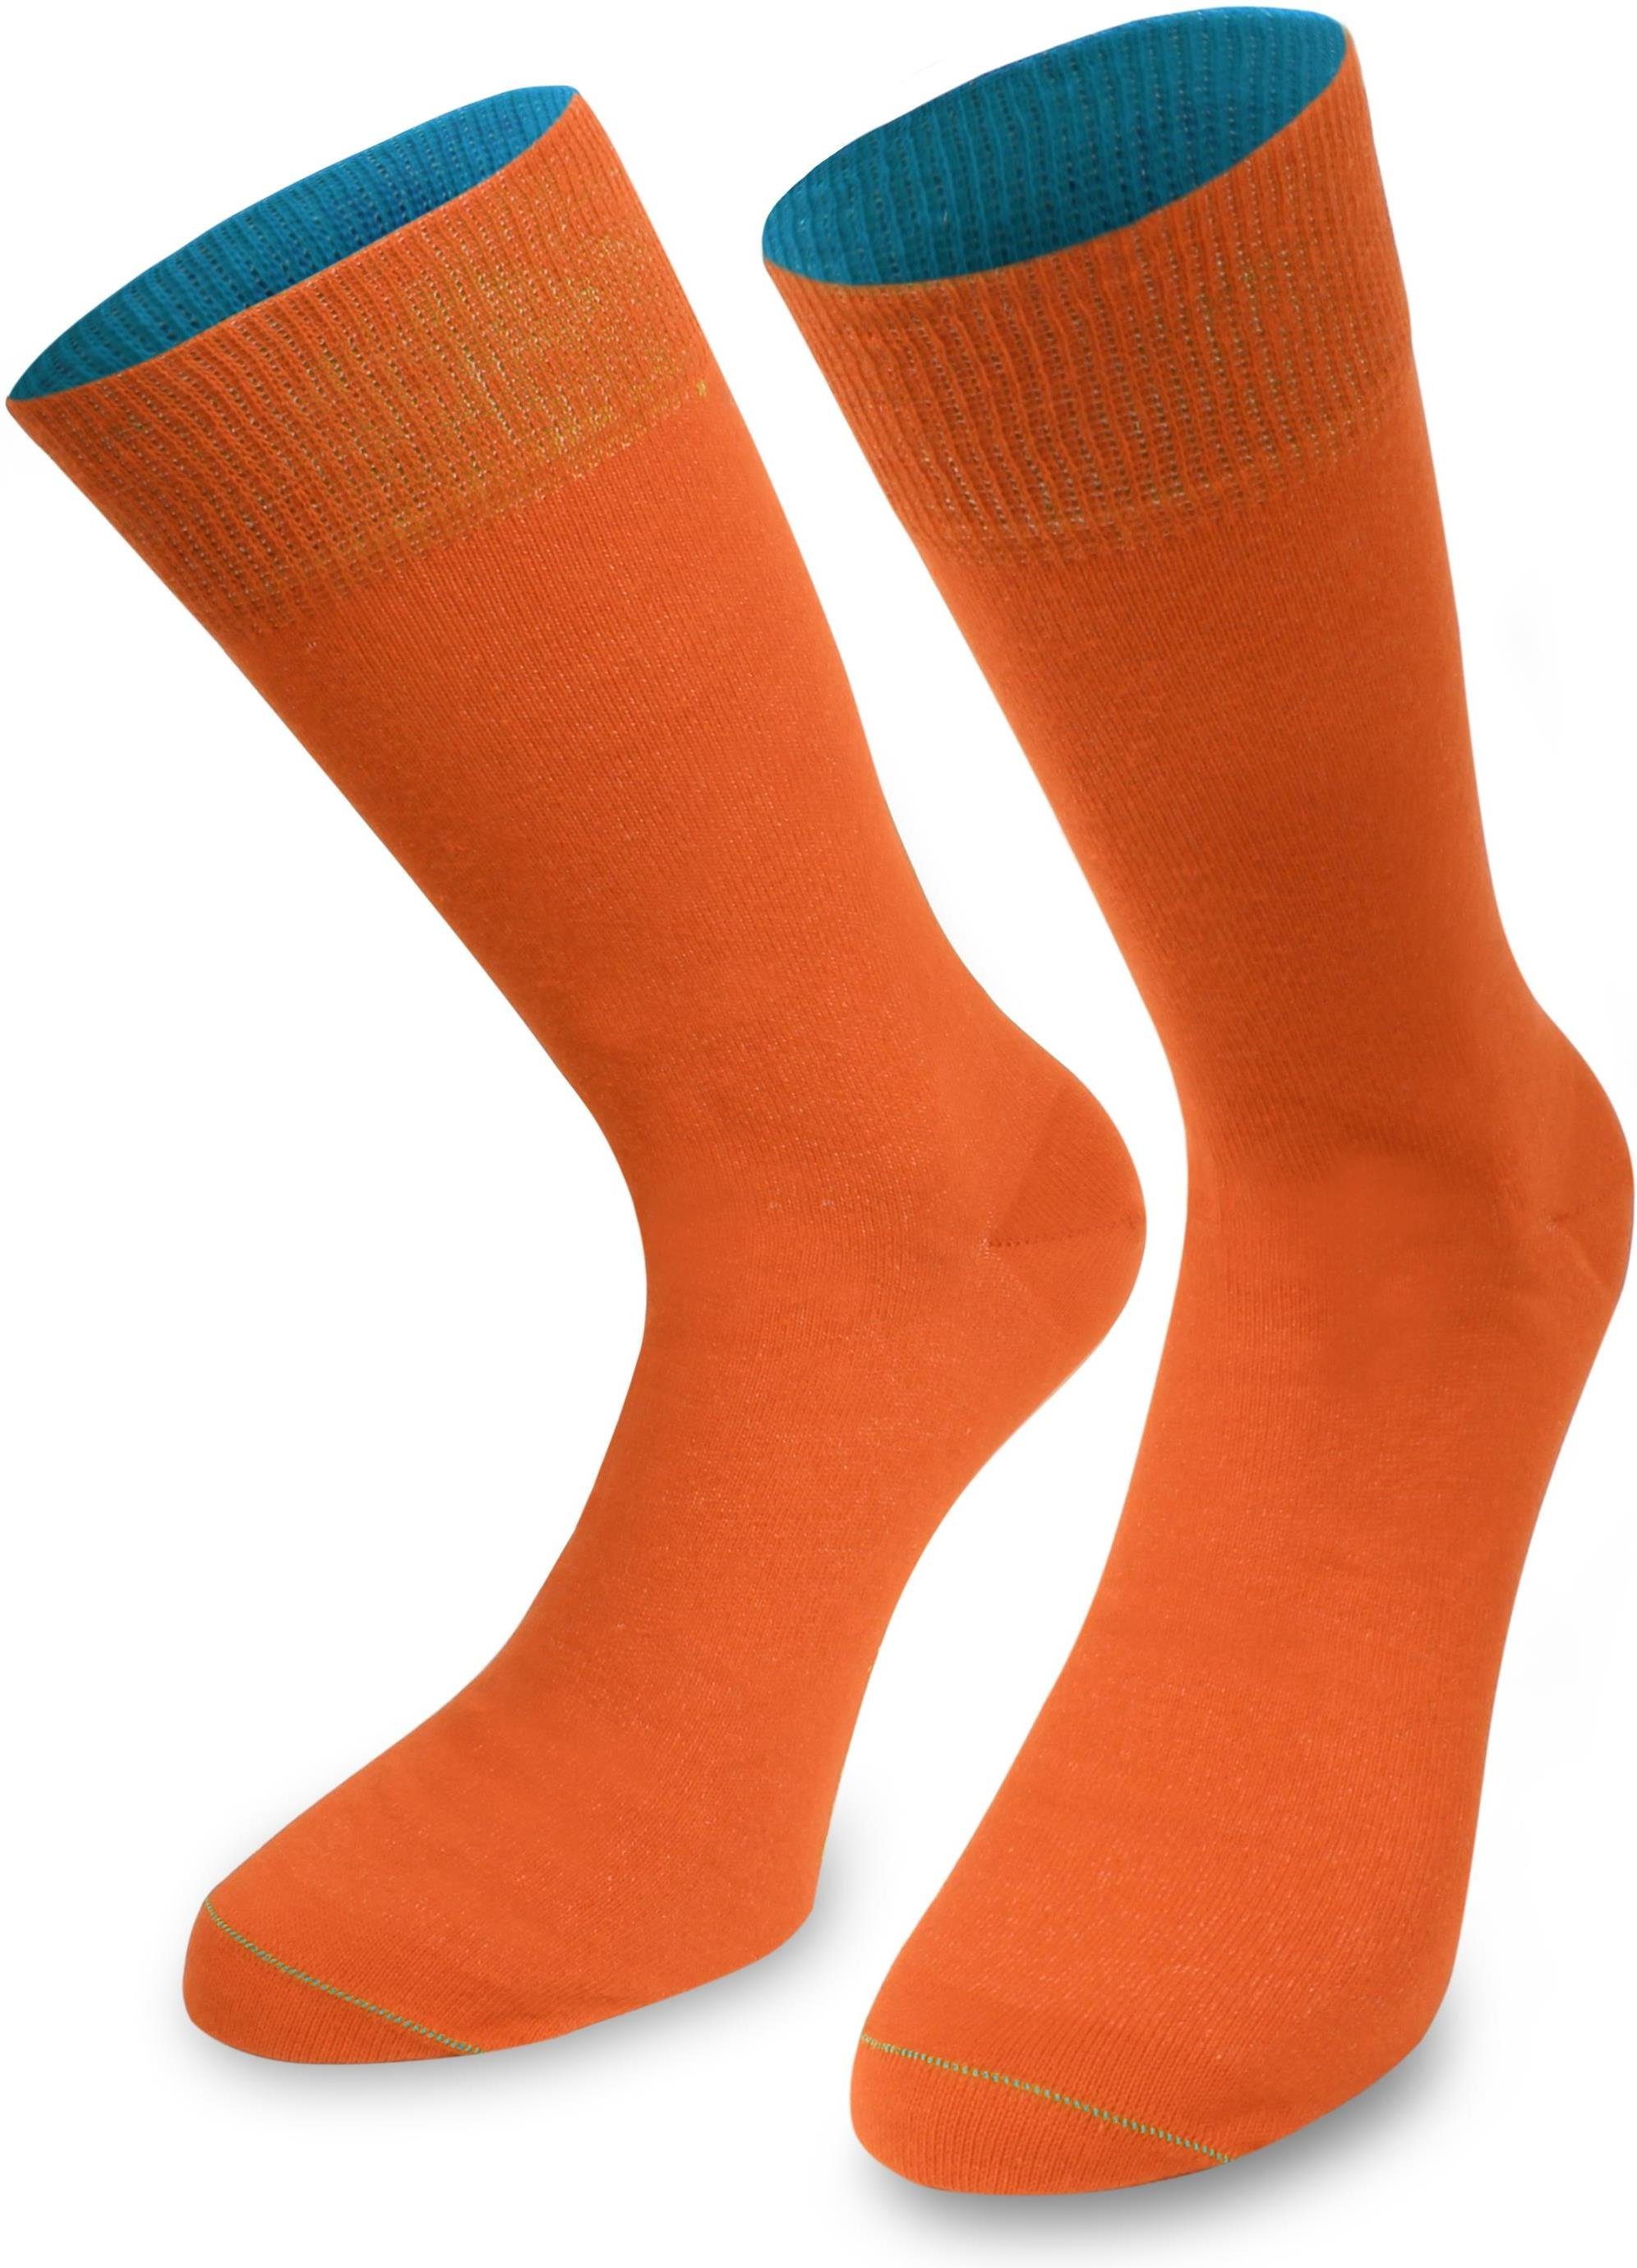 normani Basicsocken 1 Paar Socken Bi-Color (1 Paar) farbig abgesetzter Bund Orange/Türkis